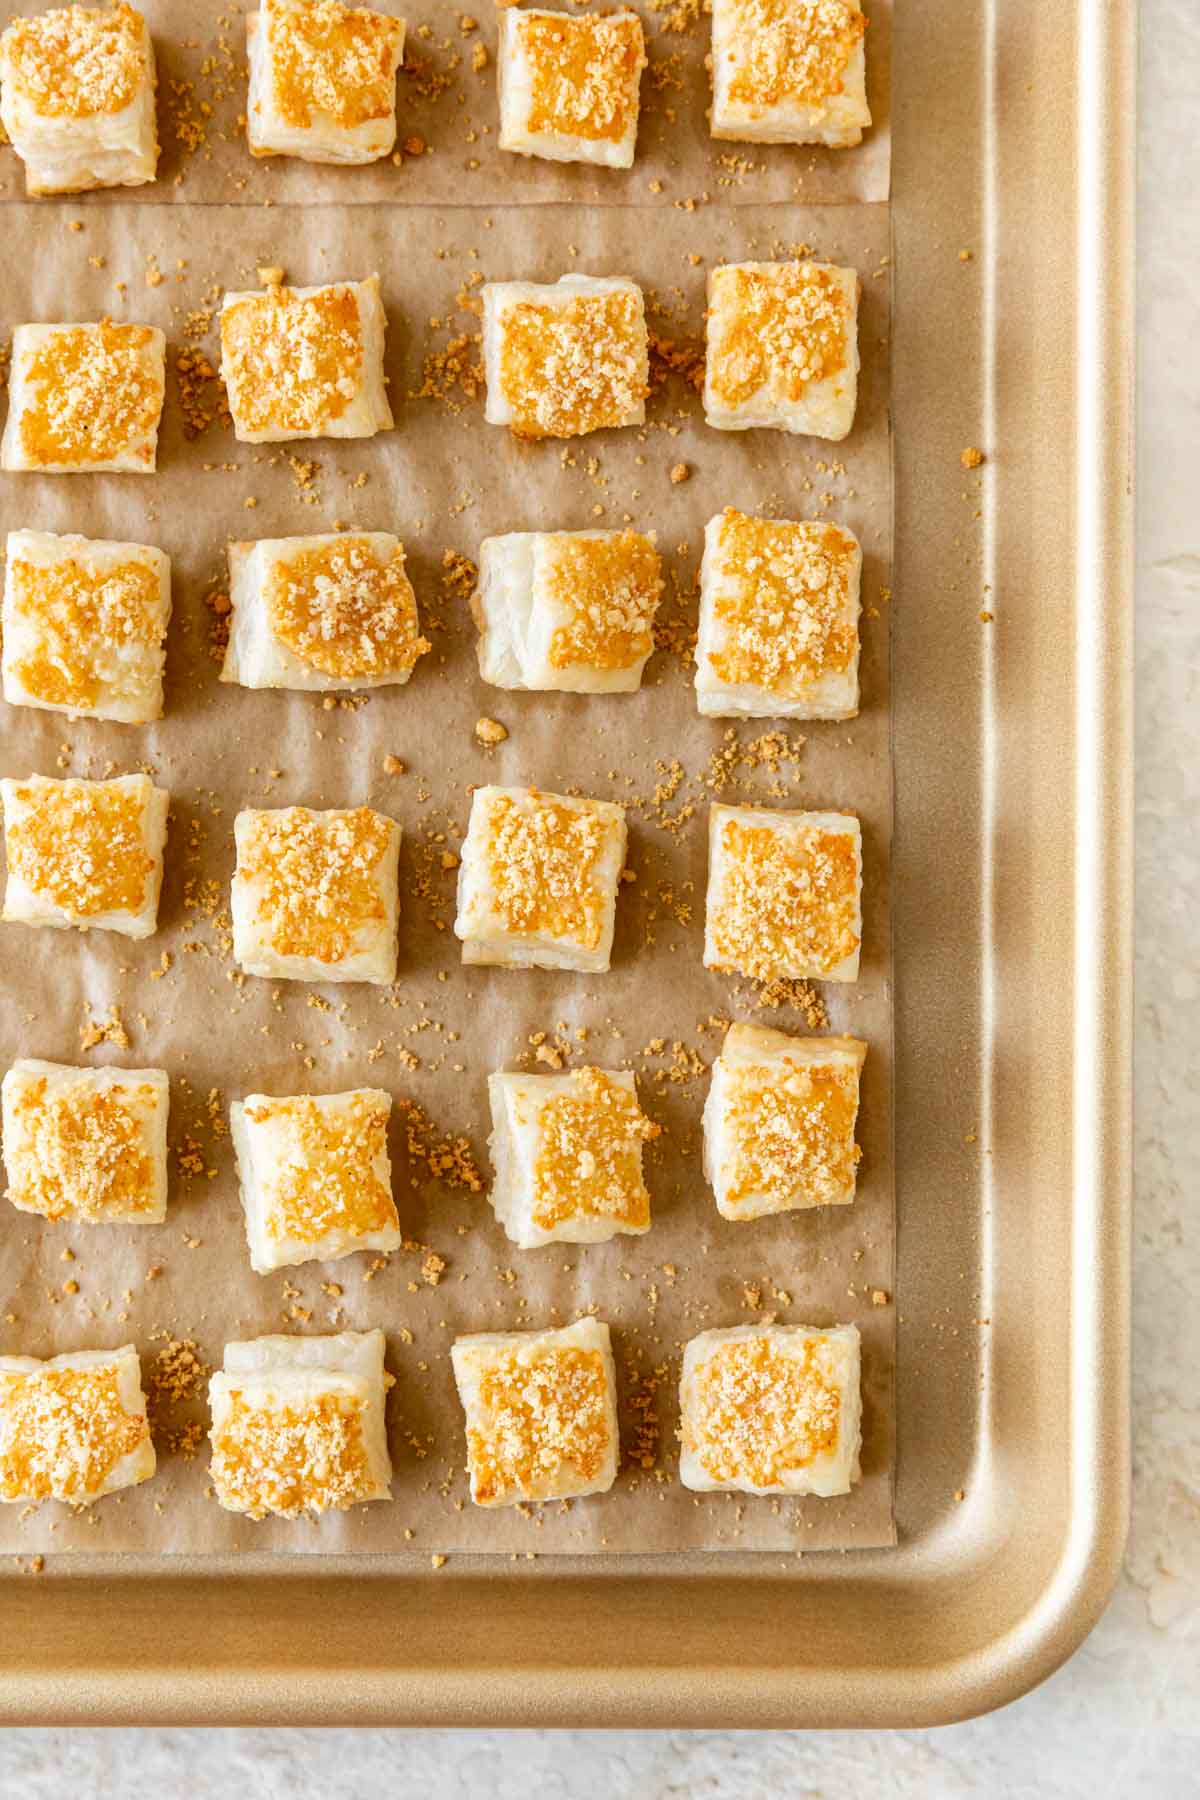 Parmesan Puffs baked on baking sheet close up